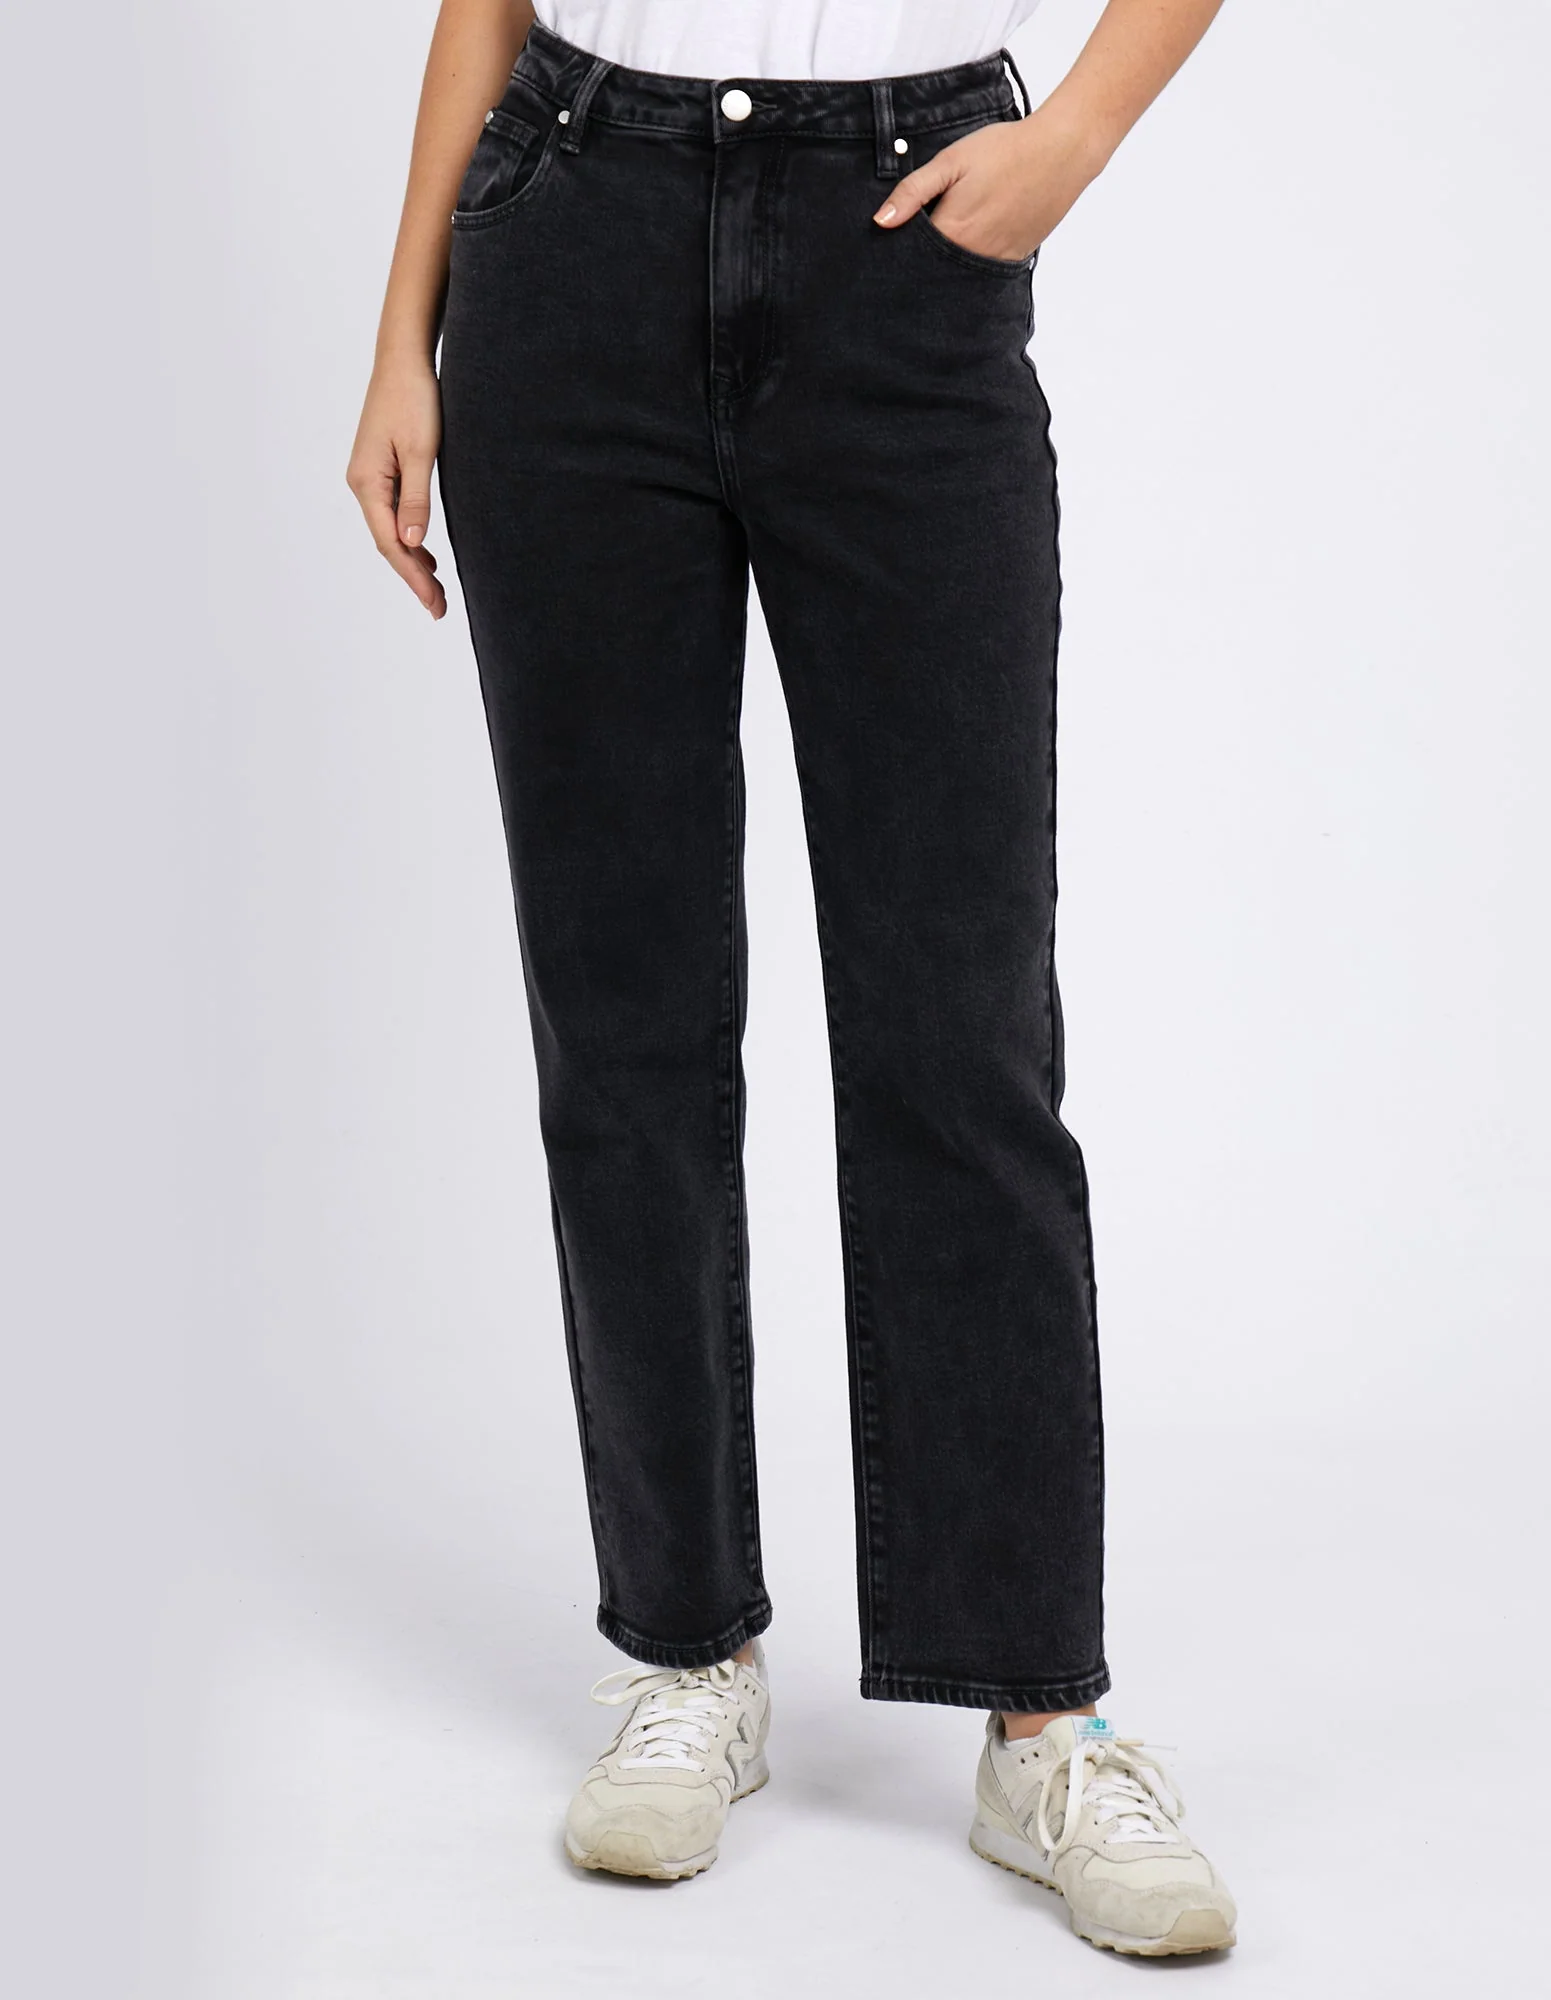 Foxwood - Enmore Wide Leg Jeans - SALE ITEM - Original Price $129.95